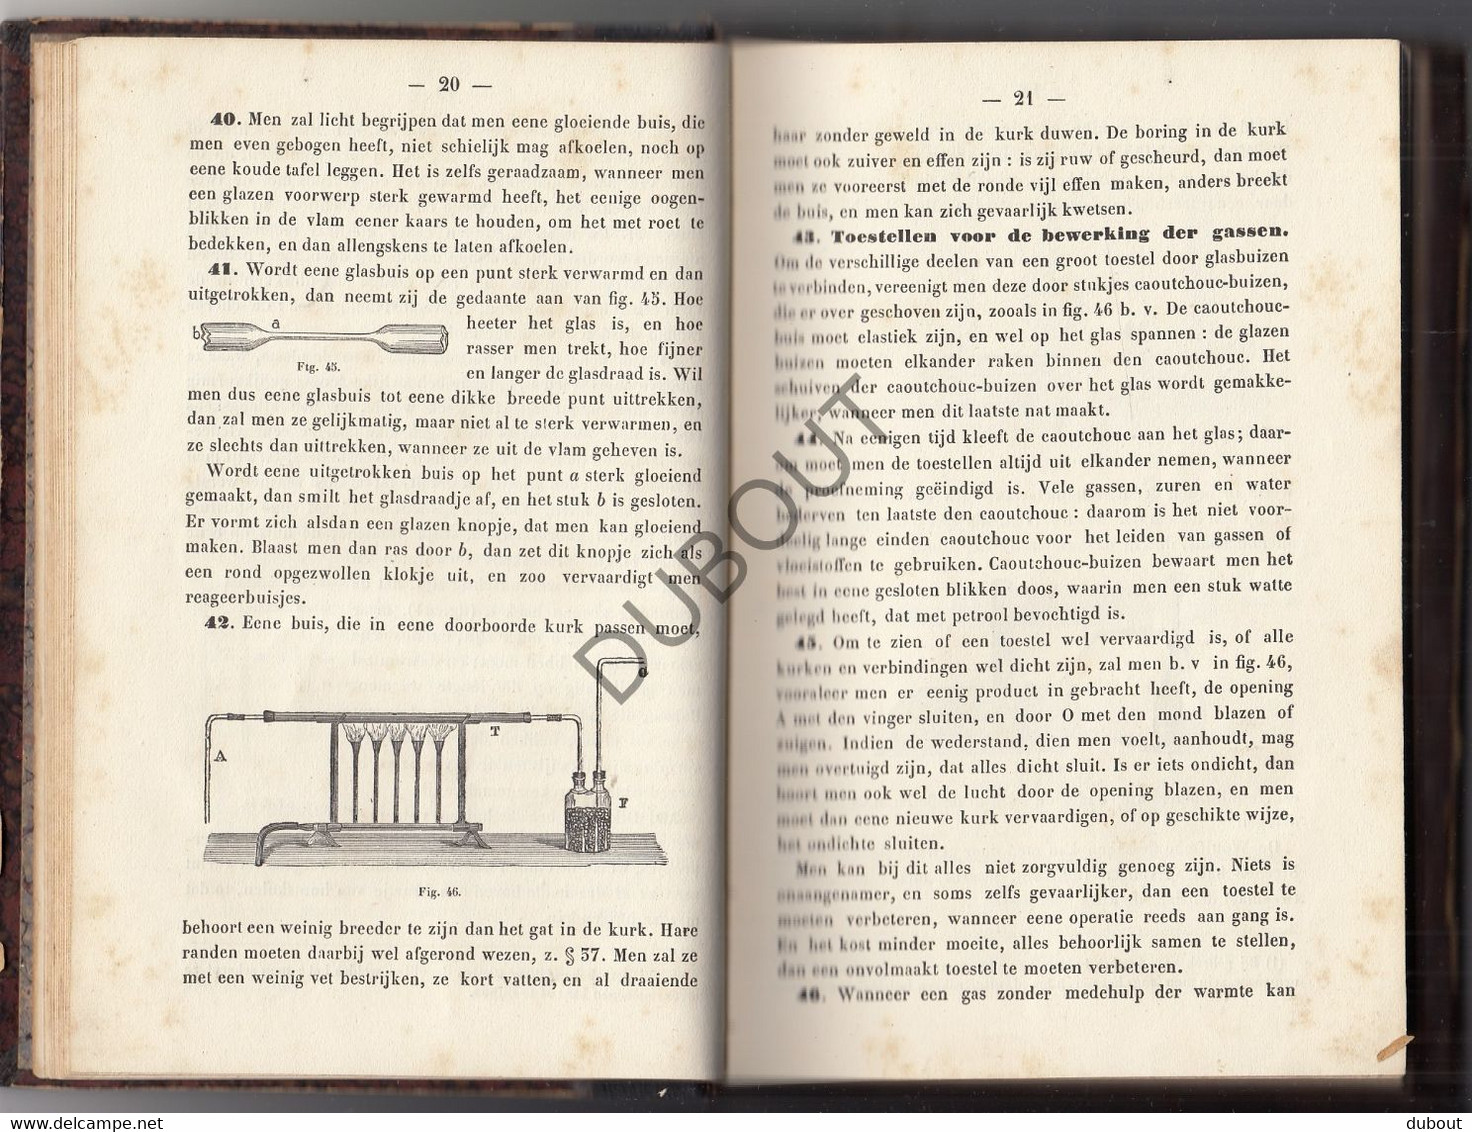 Scheikunde - Grondbeginselen - Th. Swarts - 1883, Gent - gesigneerd (W166)